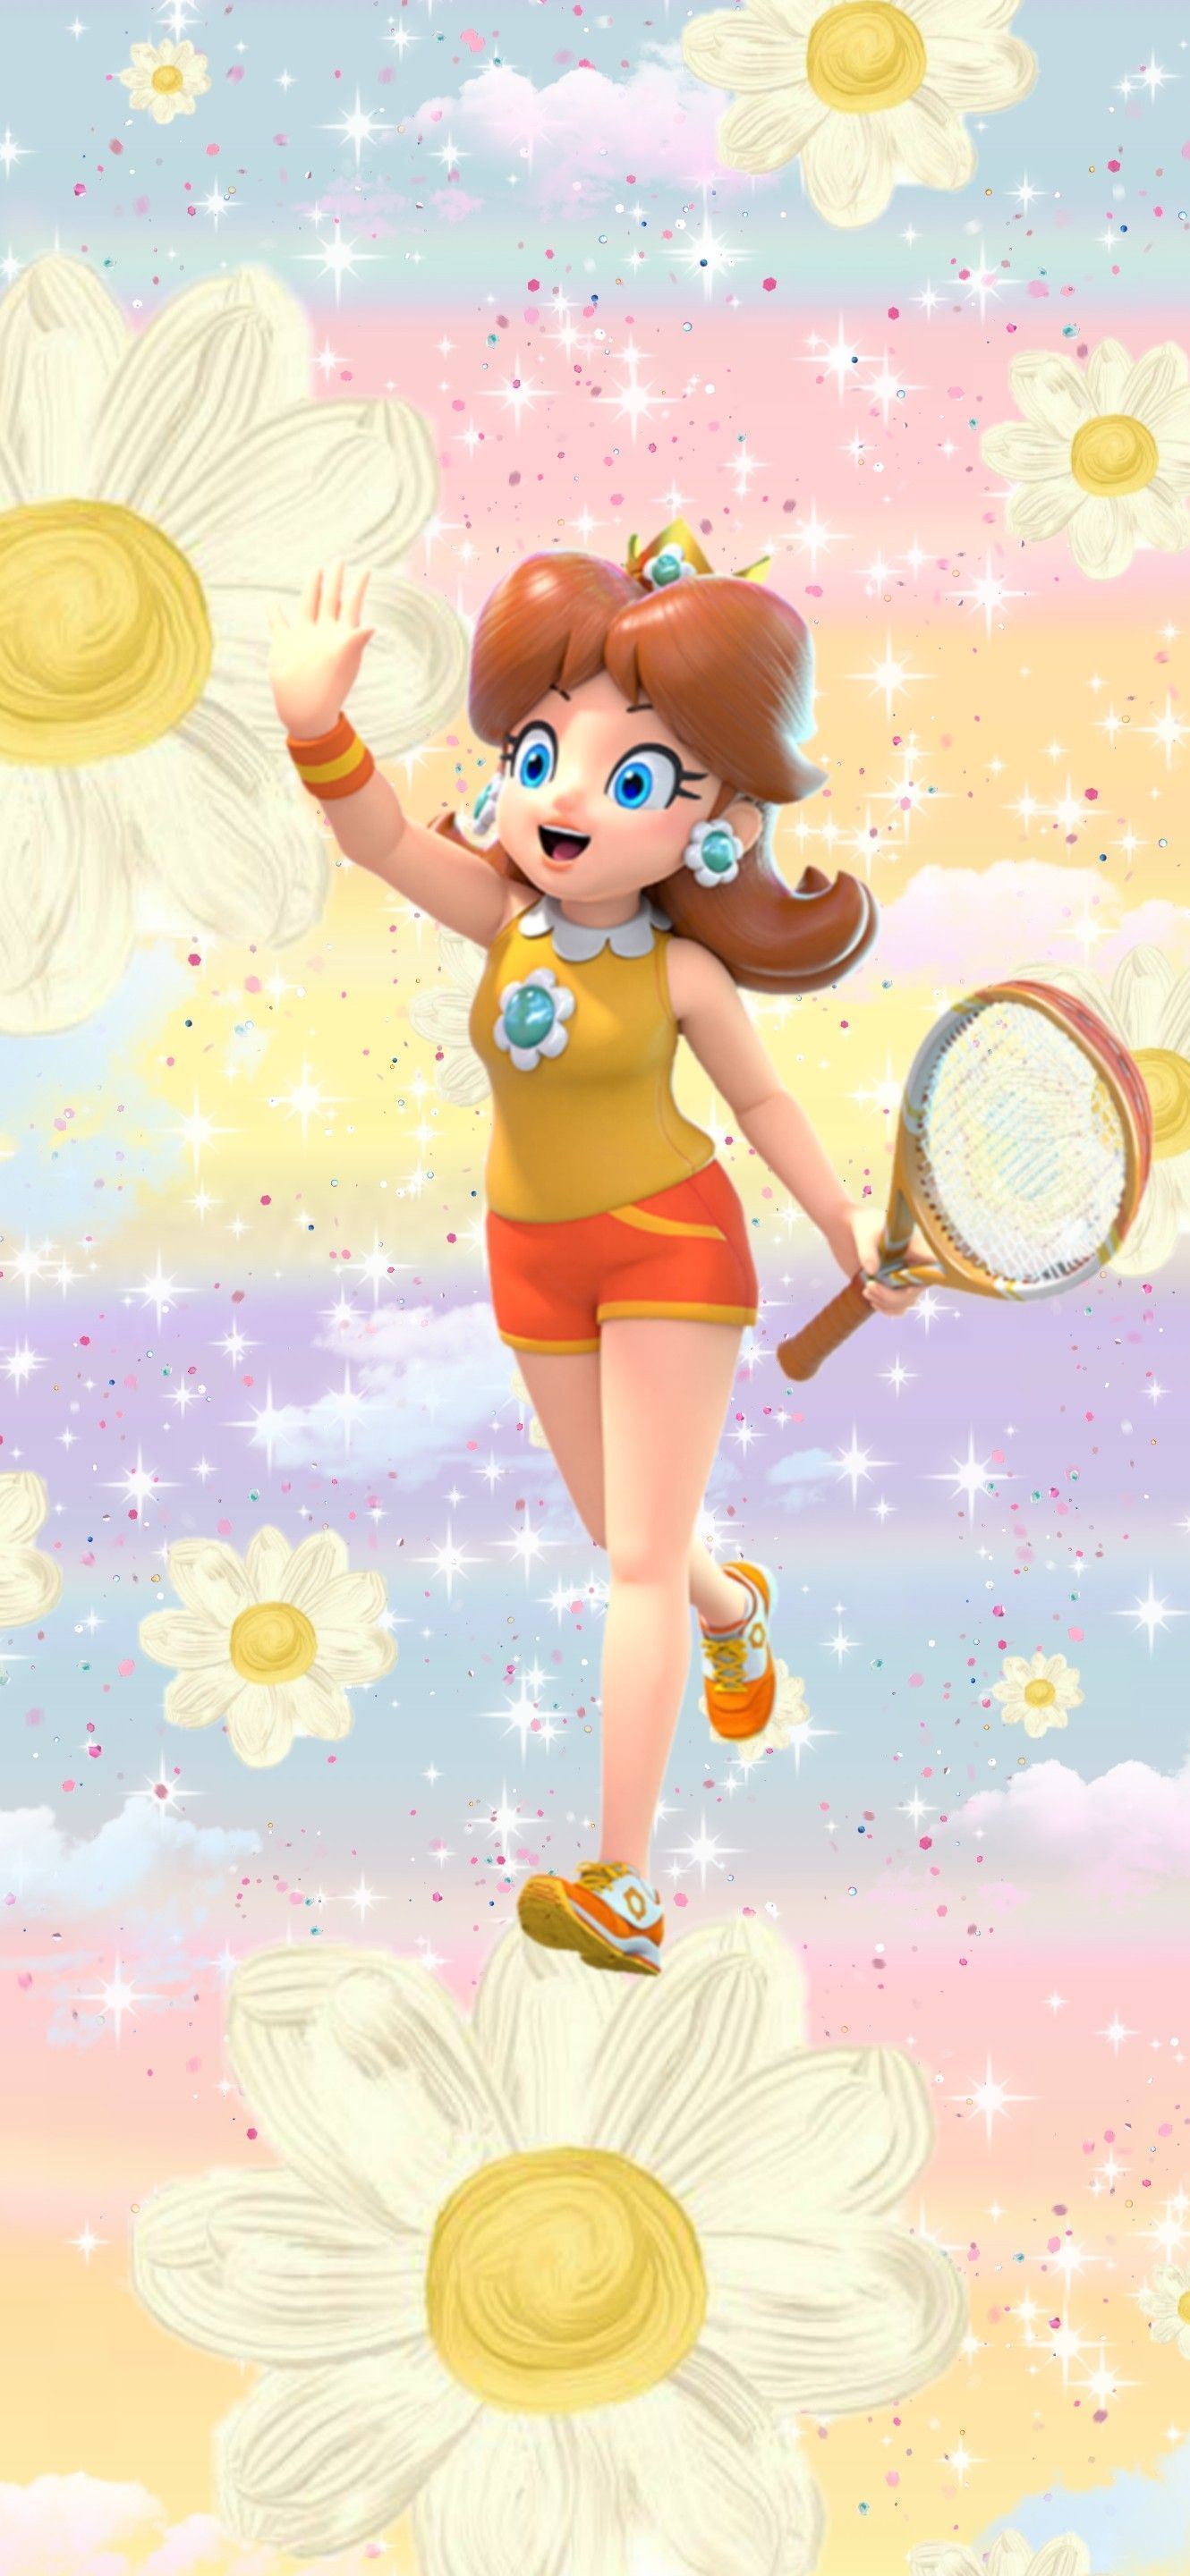 Nintendo Princess Daisy aesthetic phone background wallpaper. Daisy wallpaper, Princess daisy, Daisy drawing